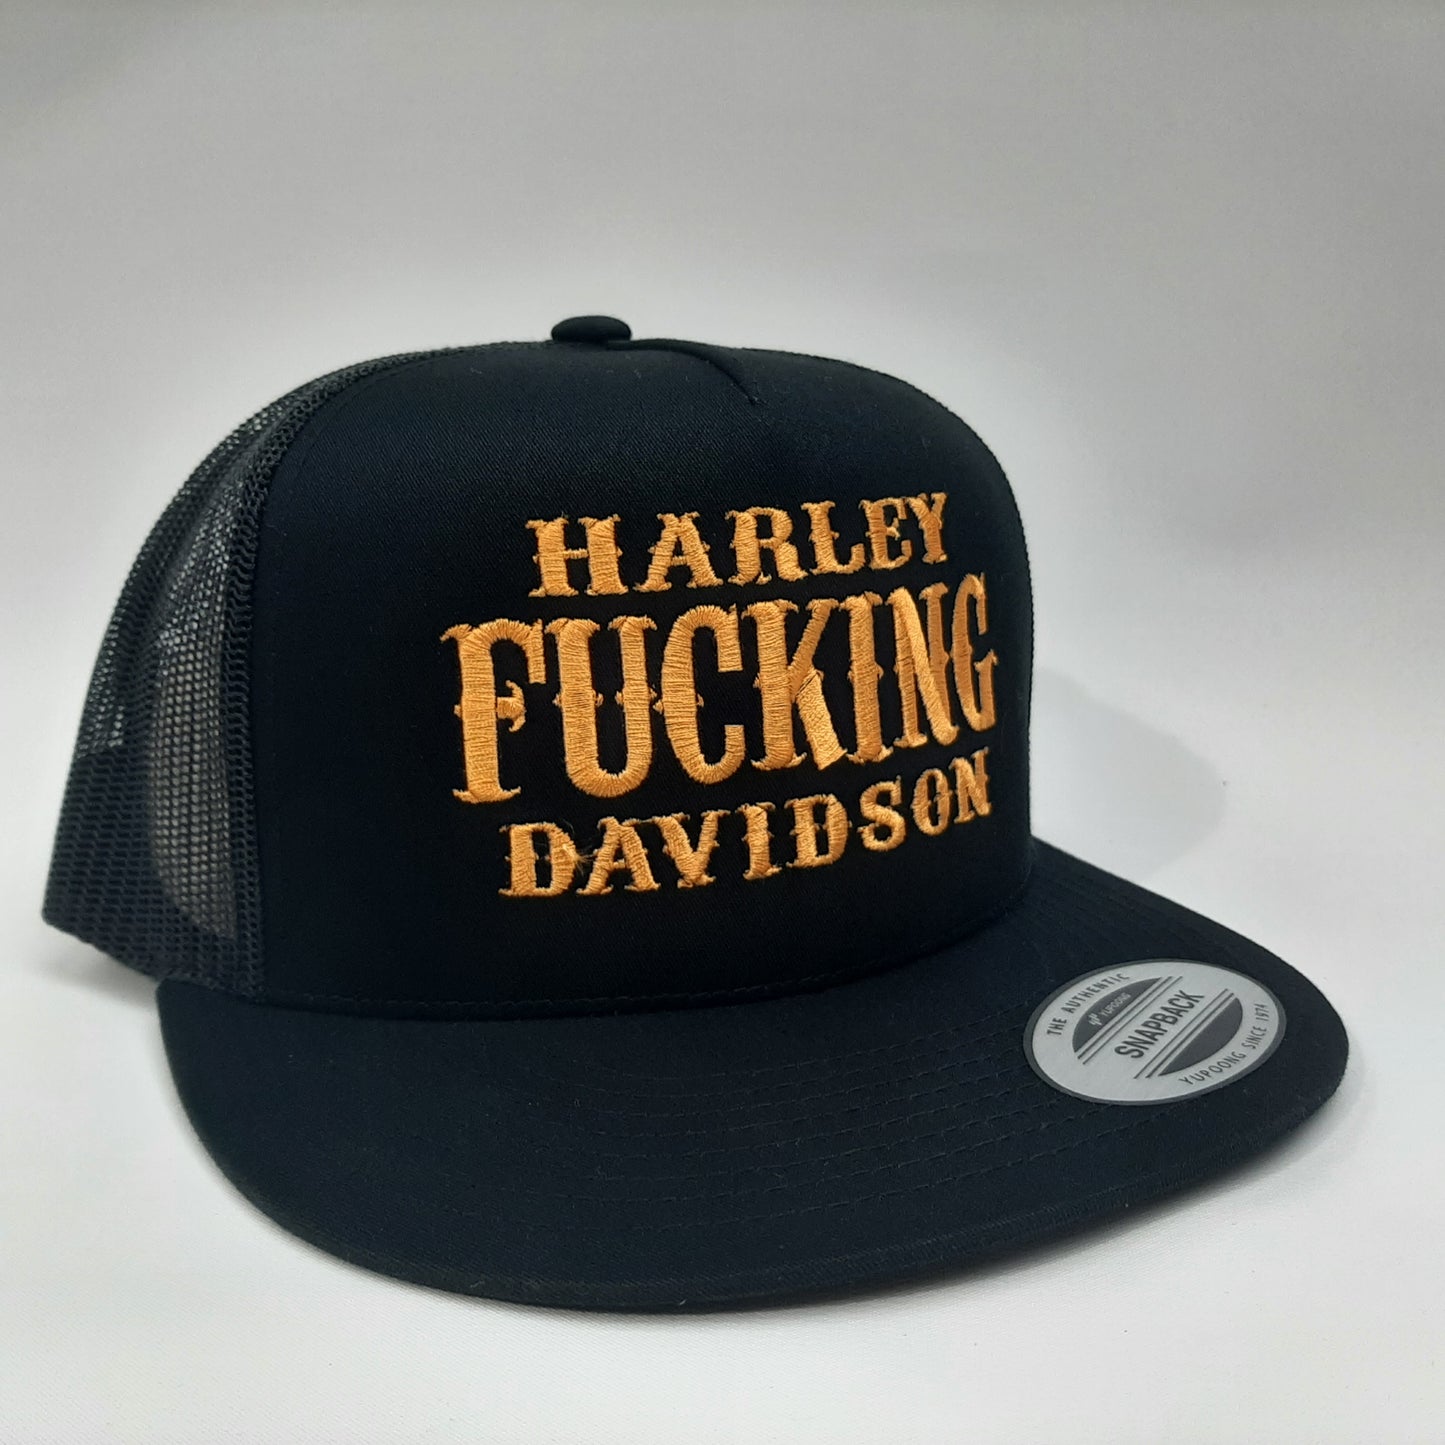 Harley Fucking Davidson Trucker Mesh Snapback Cap Hat Flat Brim Embroidered Cotton front panel polyester mesh panels Black